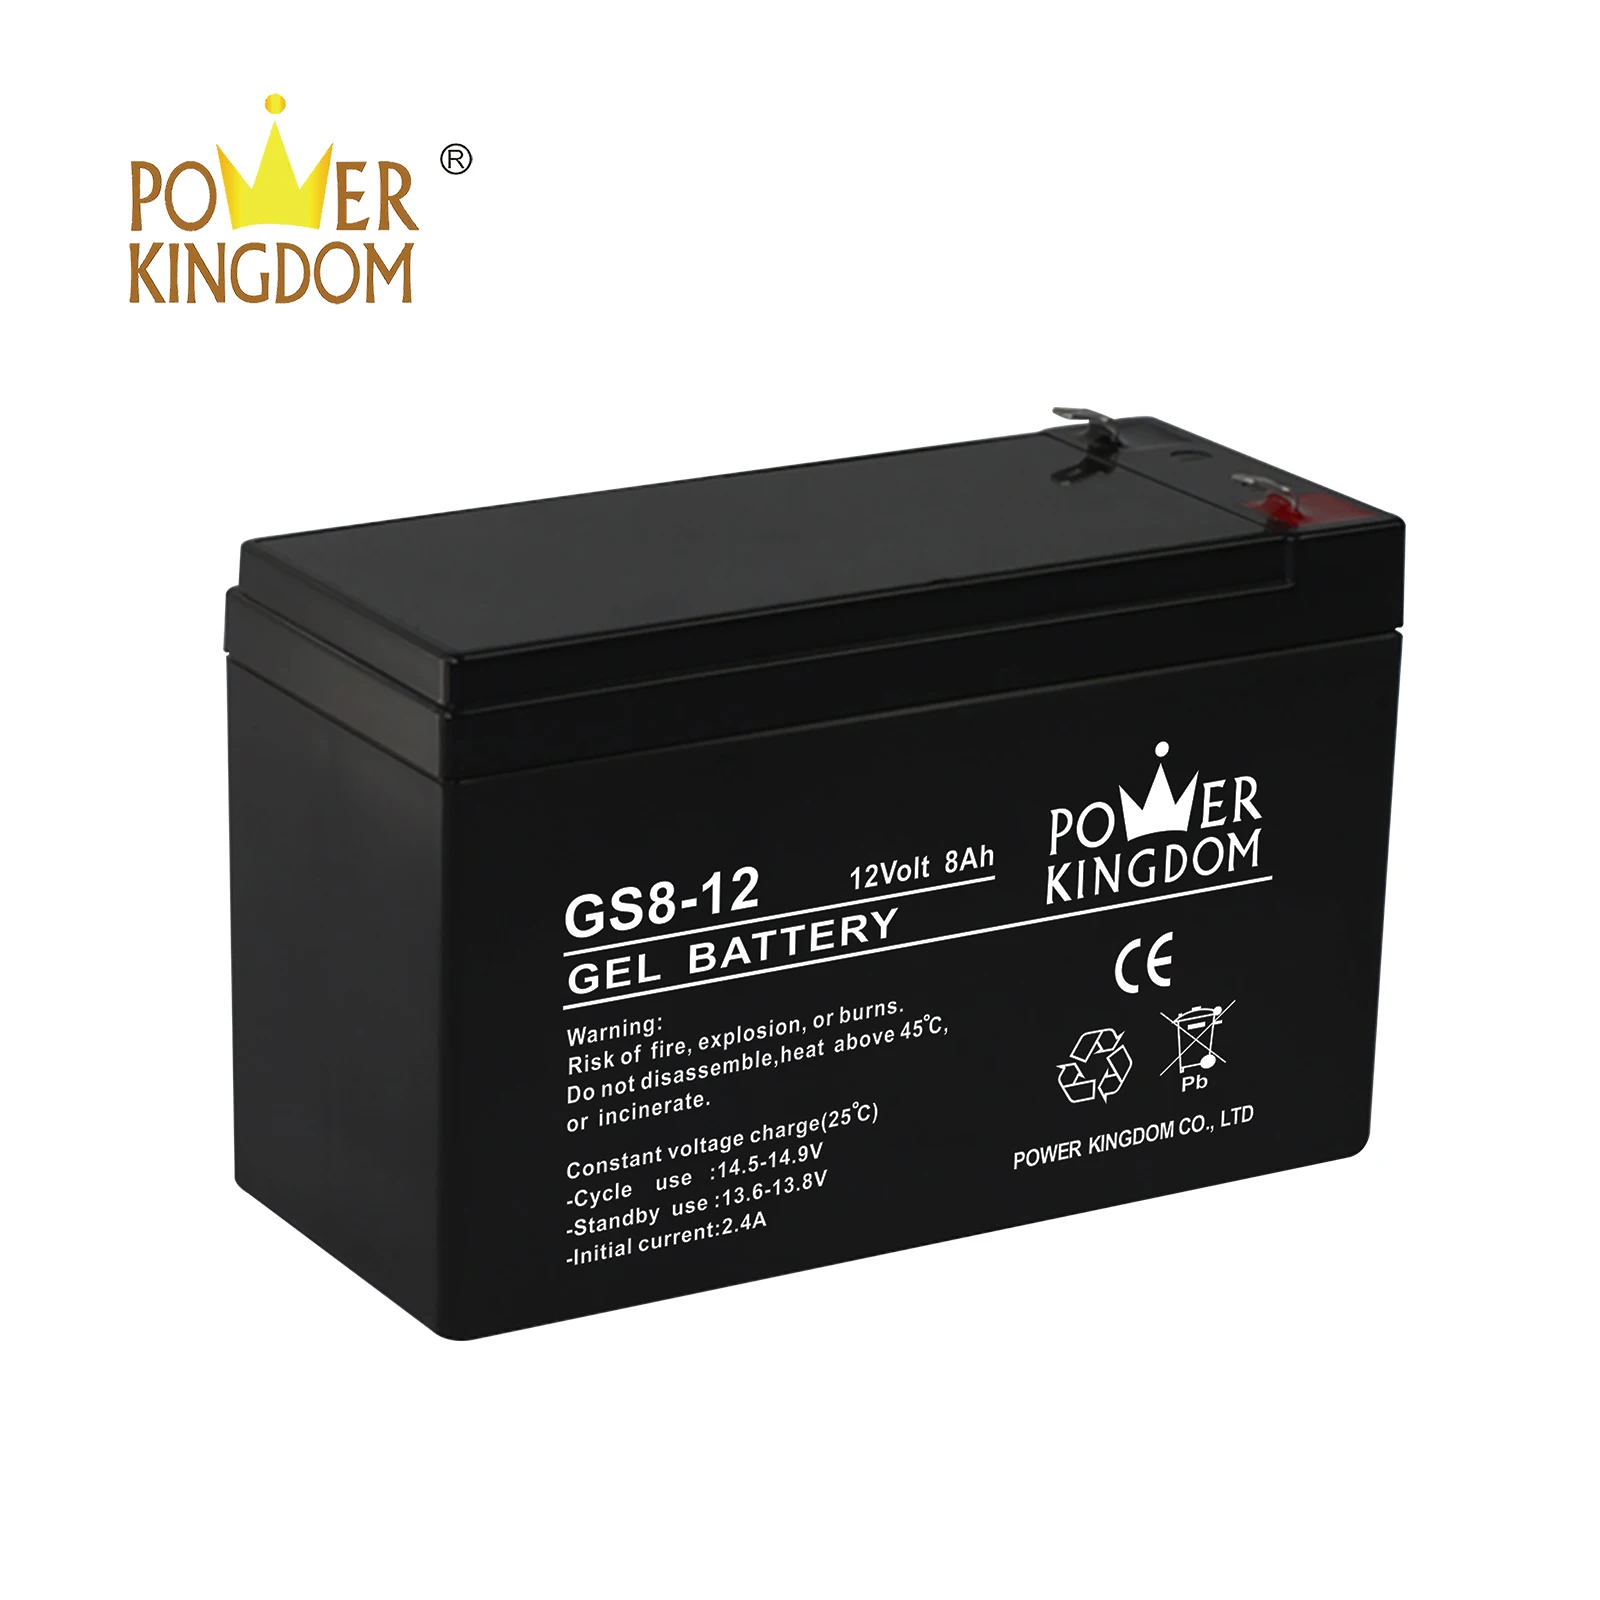 Power Kingdom New sealed lead acid battery 12v 200ah Supply medical equipment